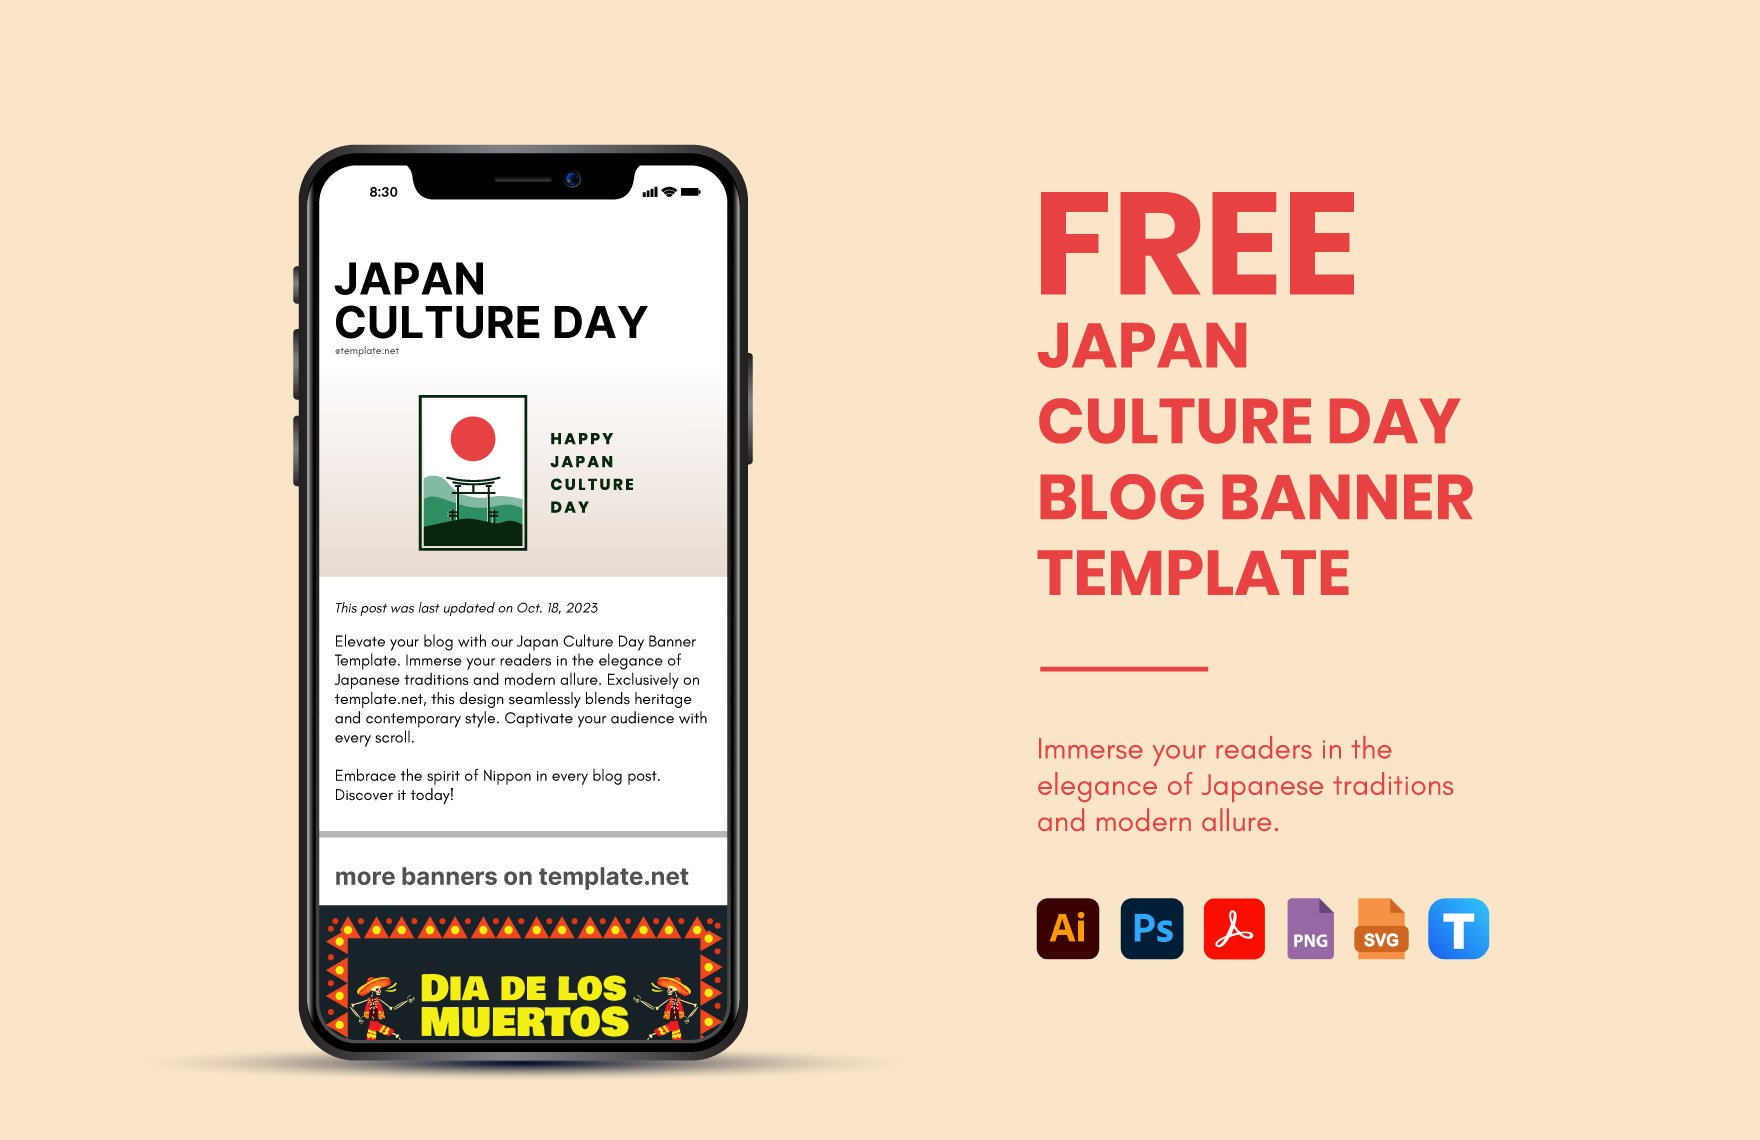 Free Japan Culture Day Blog Banner Template in PDF, Illustrator, PSD, SVG, PNG